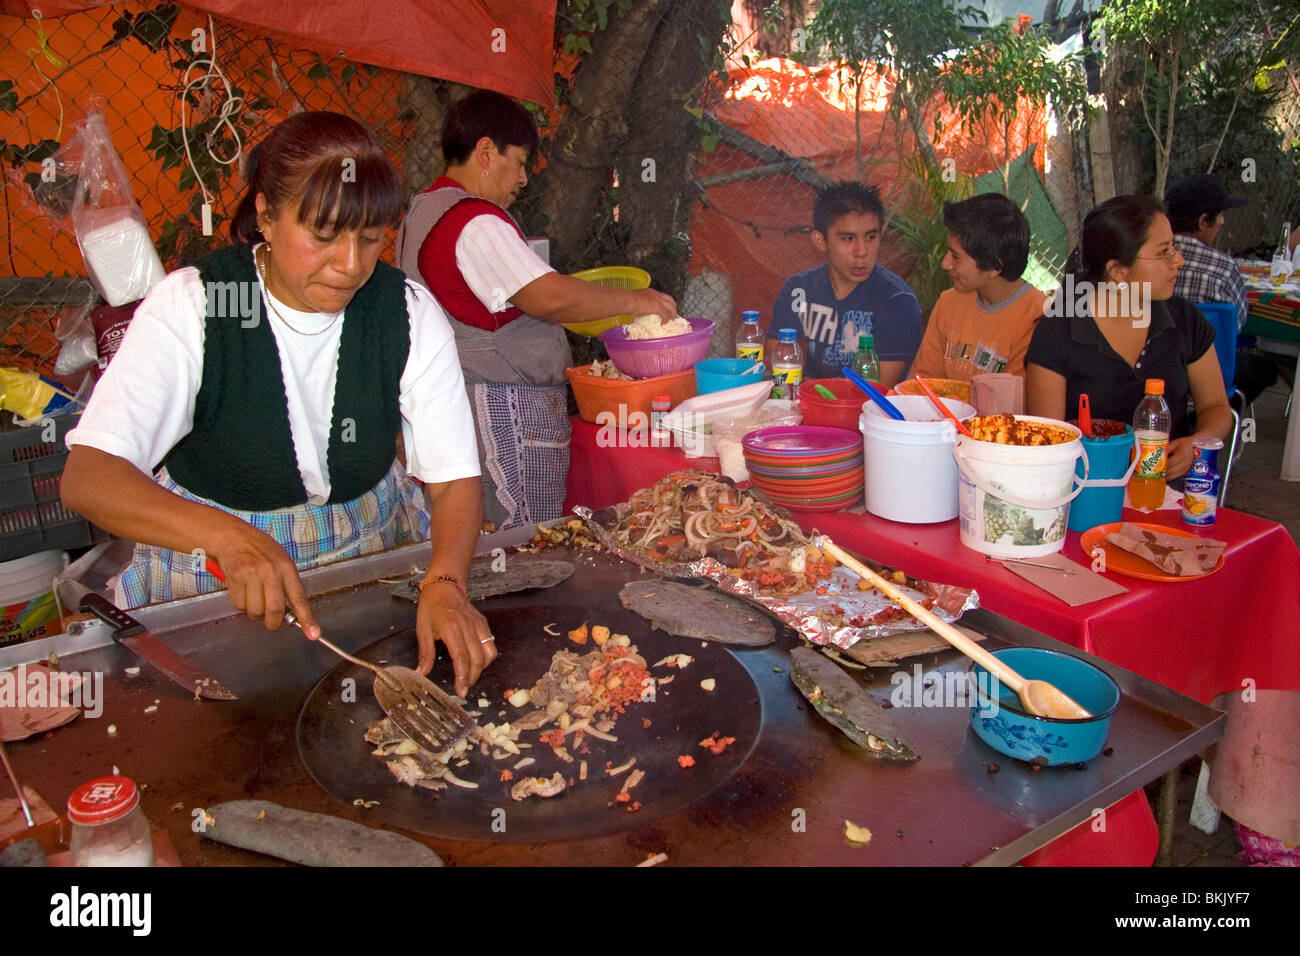 Food vendor along the Xochimilco canals within Mexico City, Mexico. Stock Photo